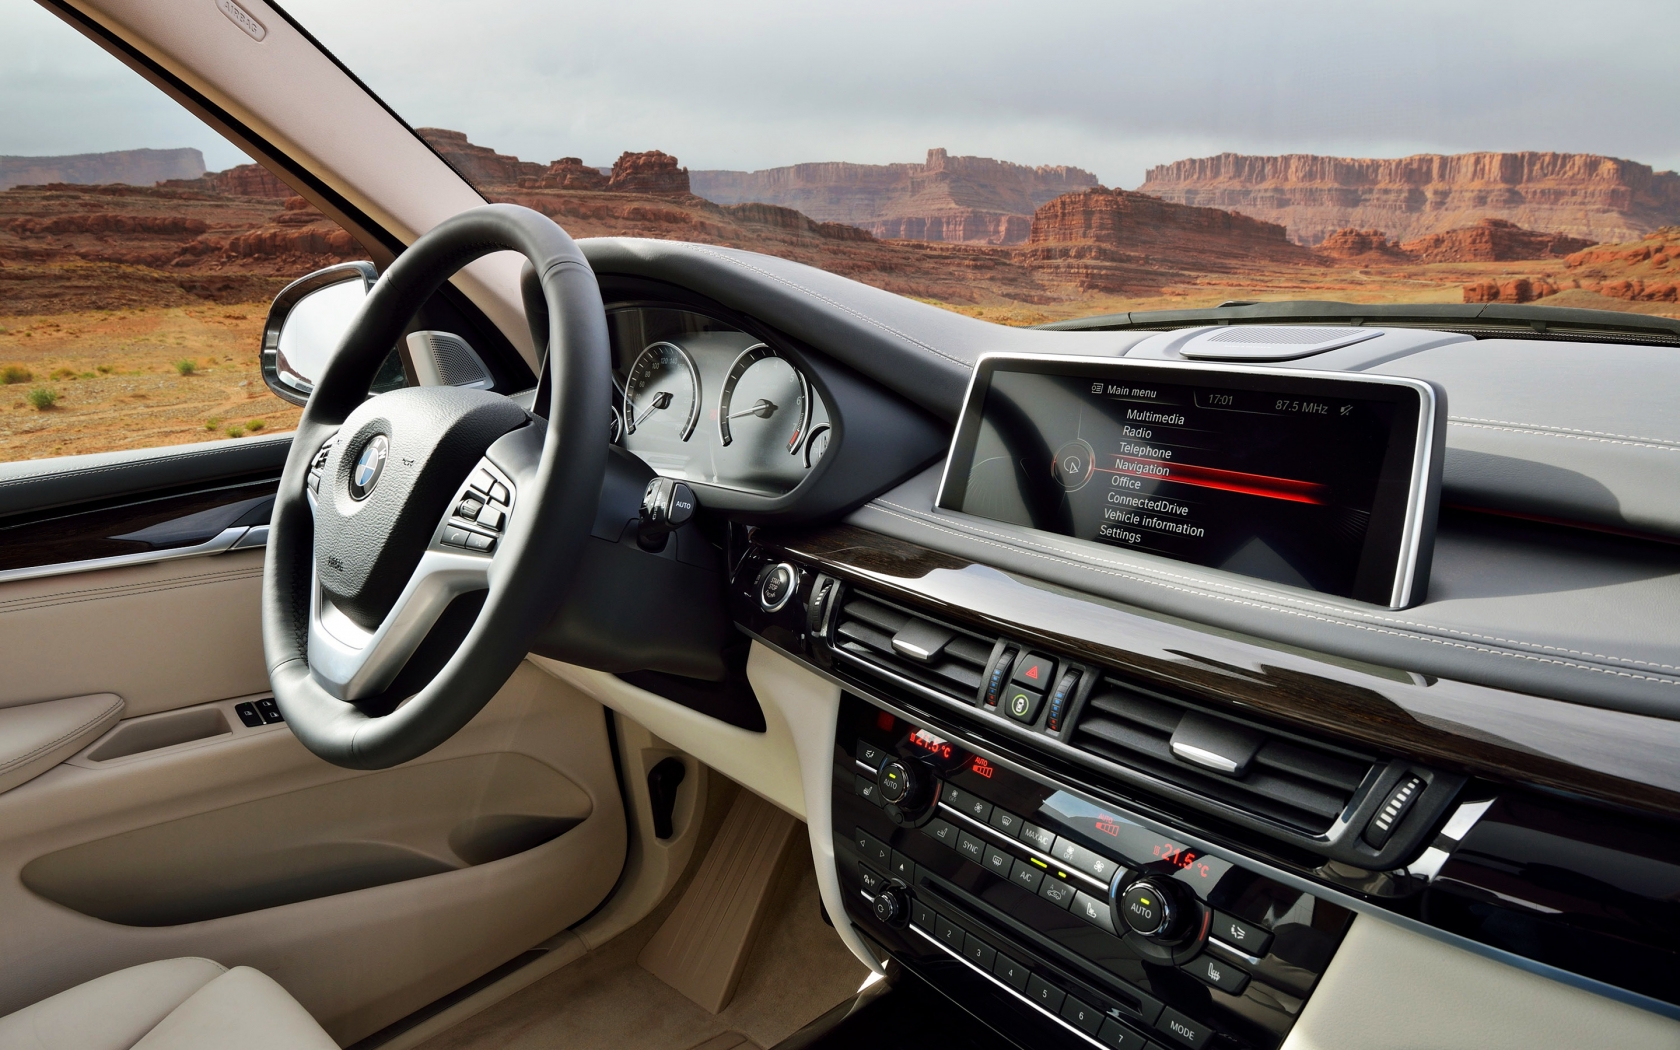 BMW X5 2014 Dashboard for 1680 x 1050 widescreen resolution